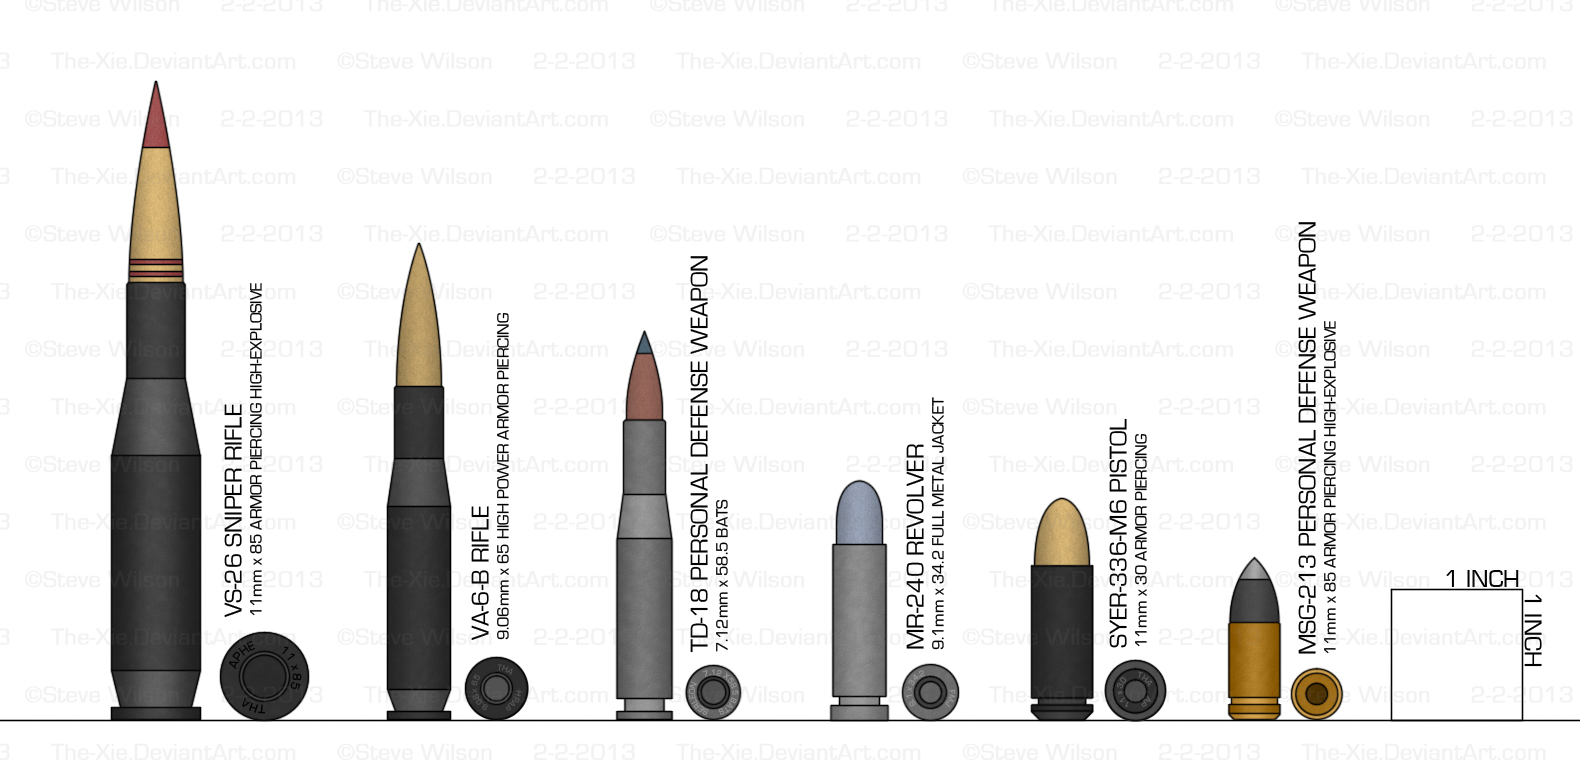 ammunition types chart